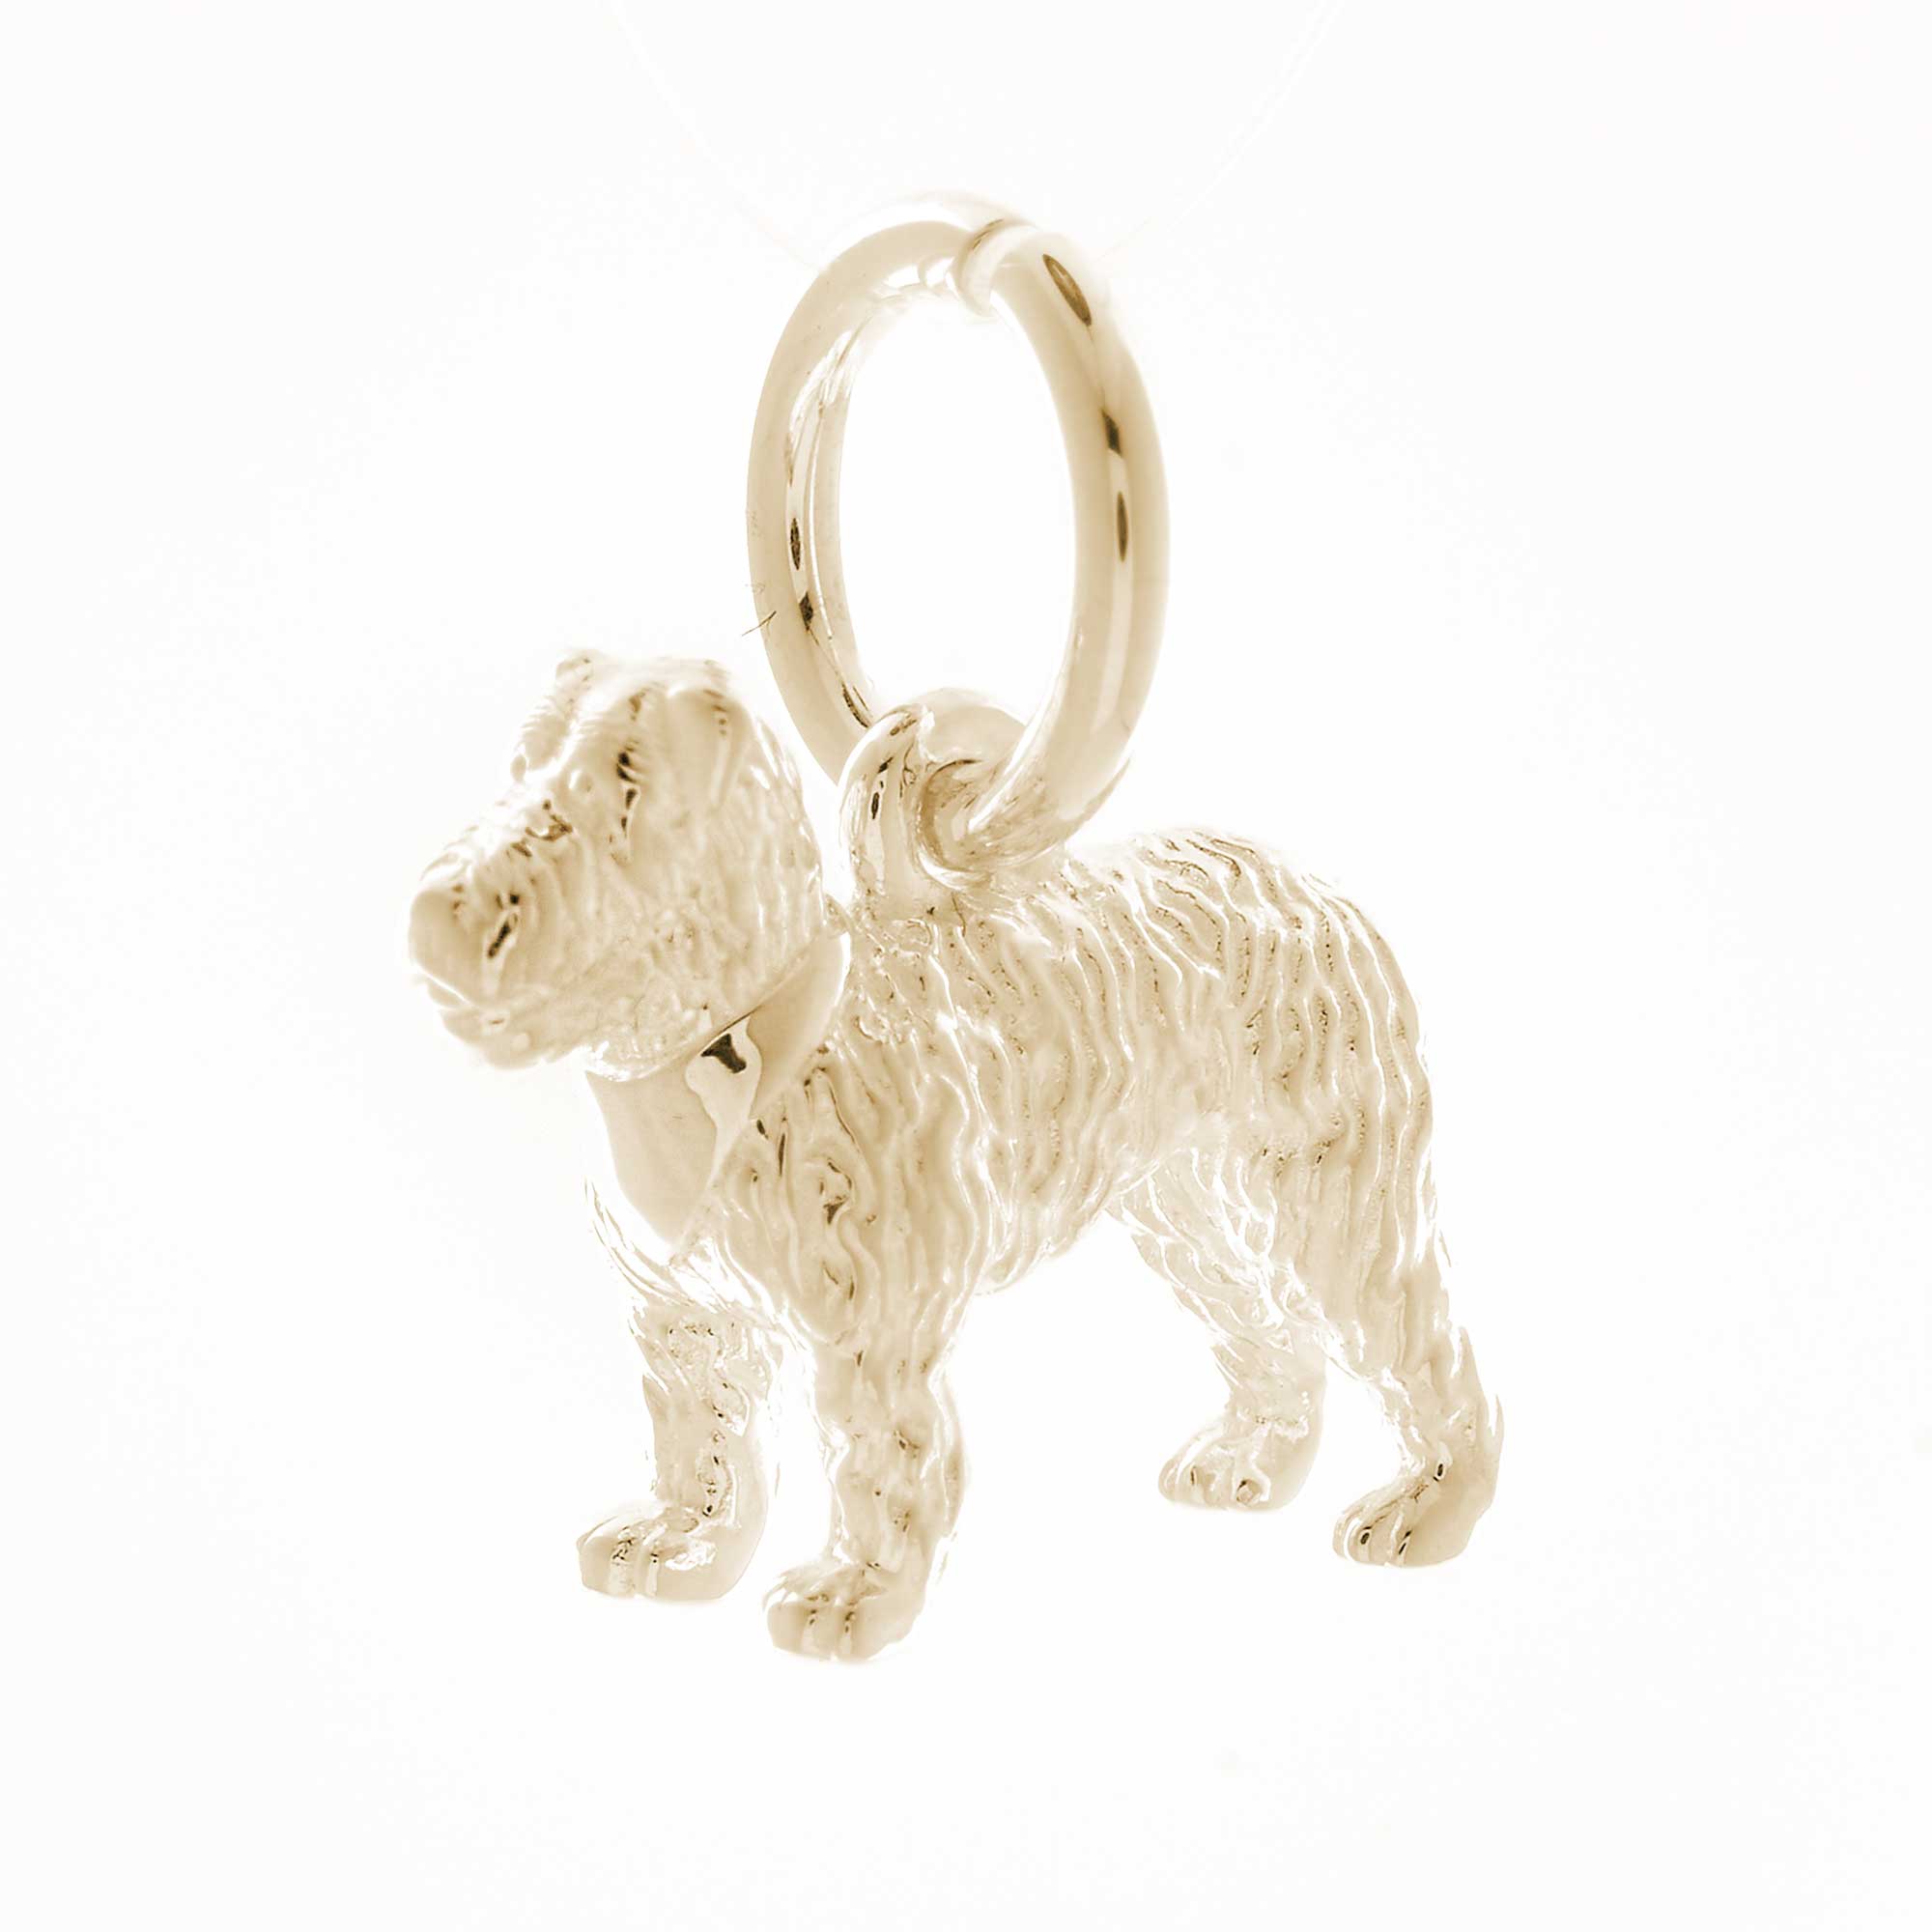 Solid gold fox terrier charm scarlett jewellery Brighton UK gold dog charms for bracelets